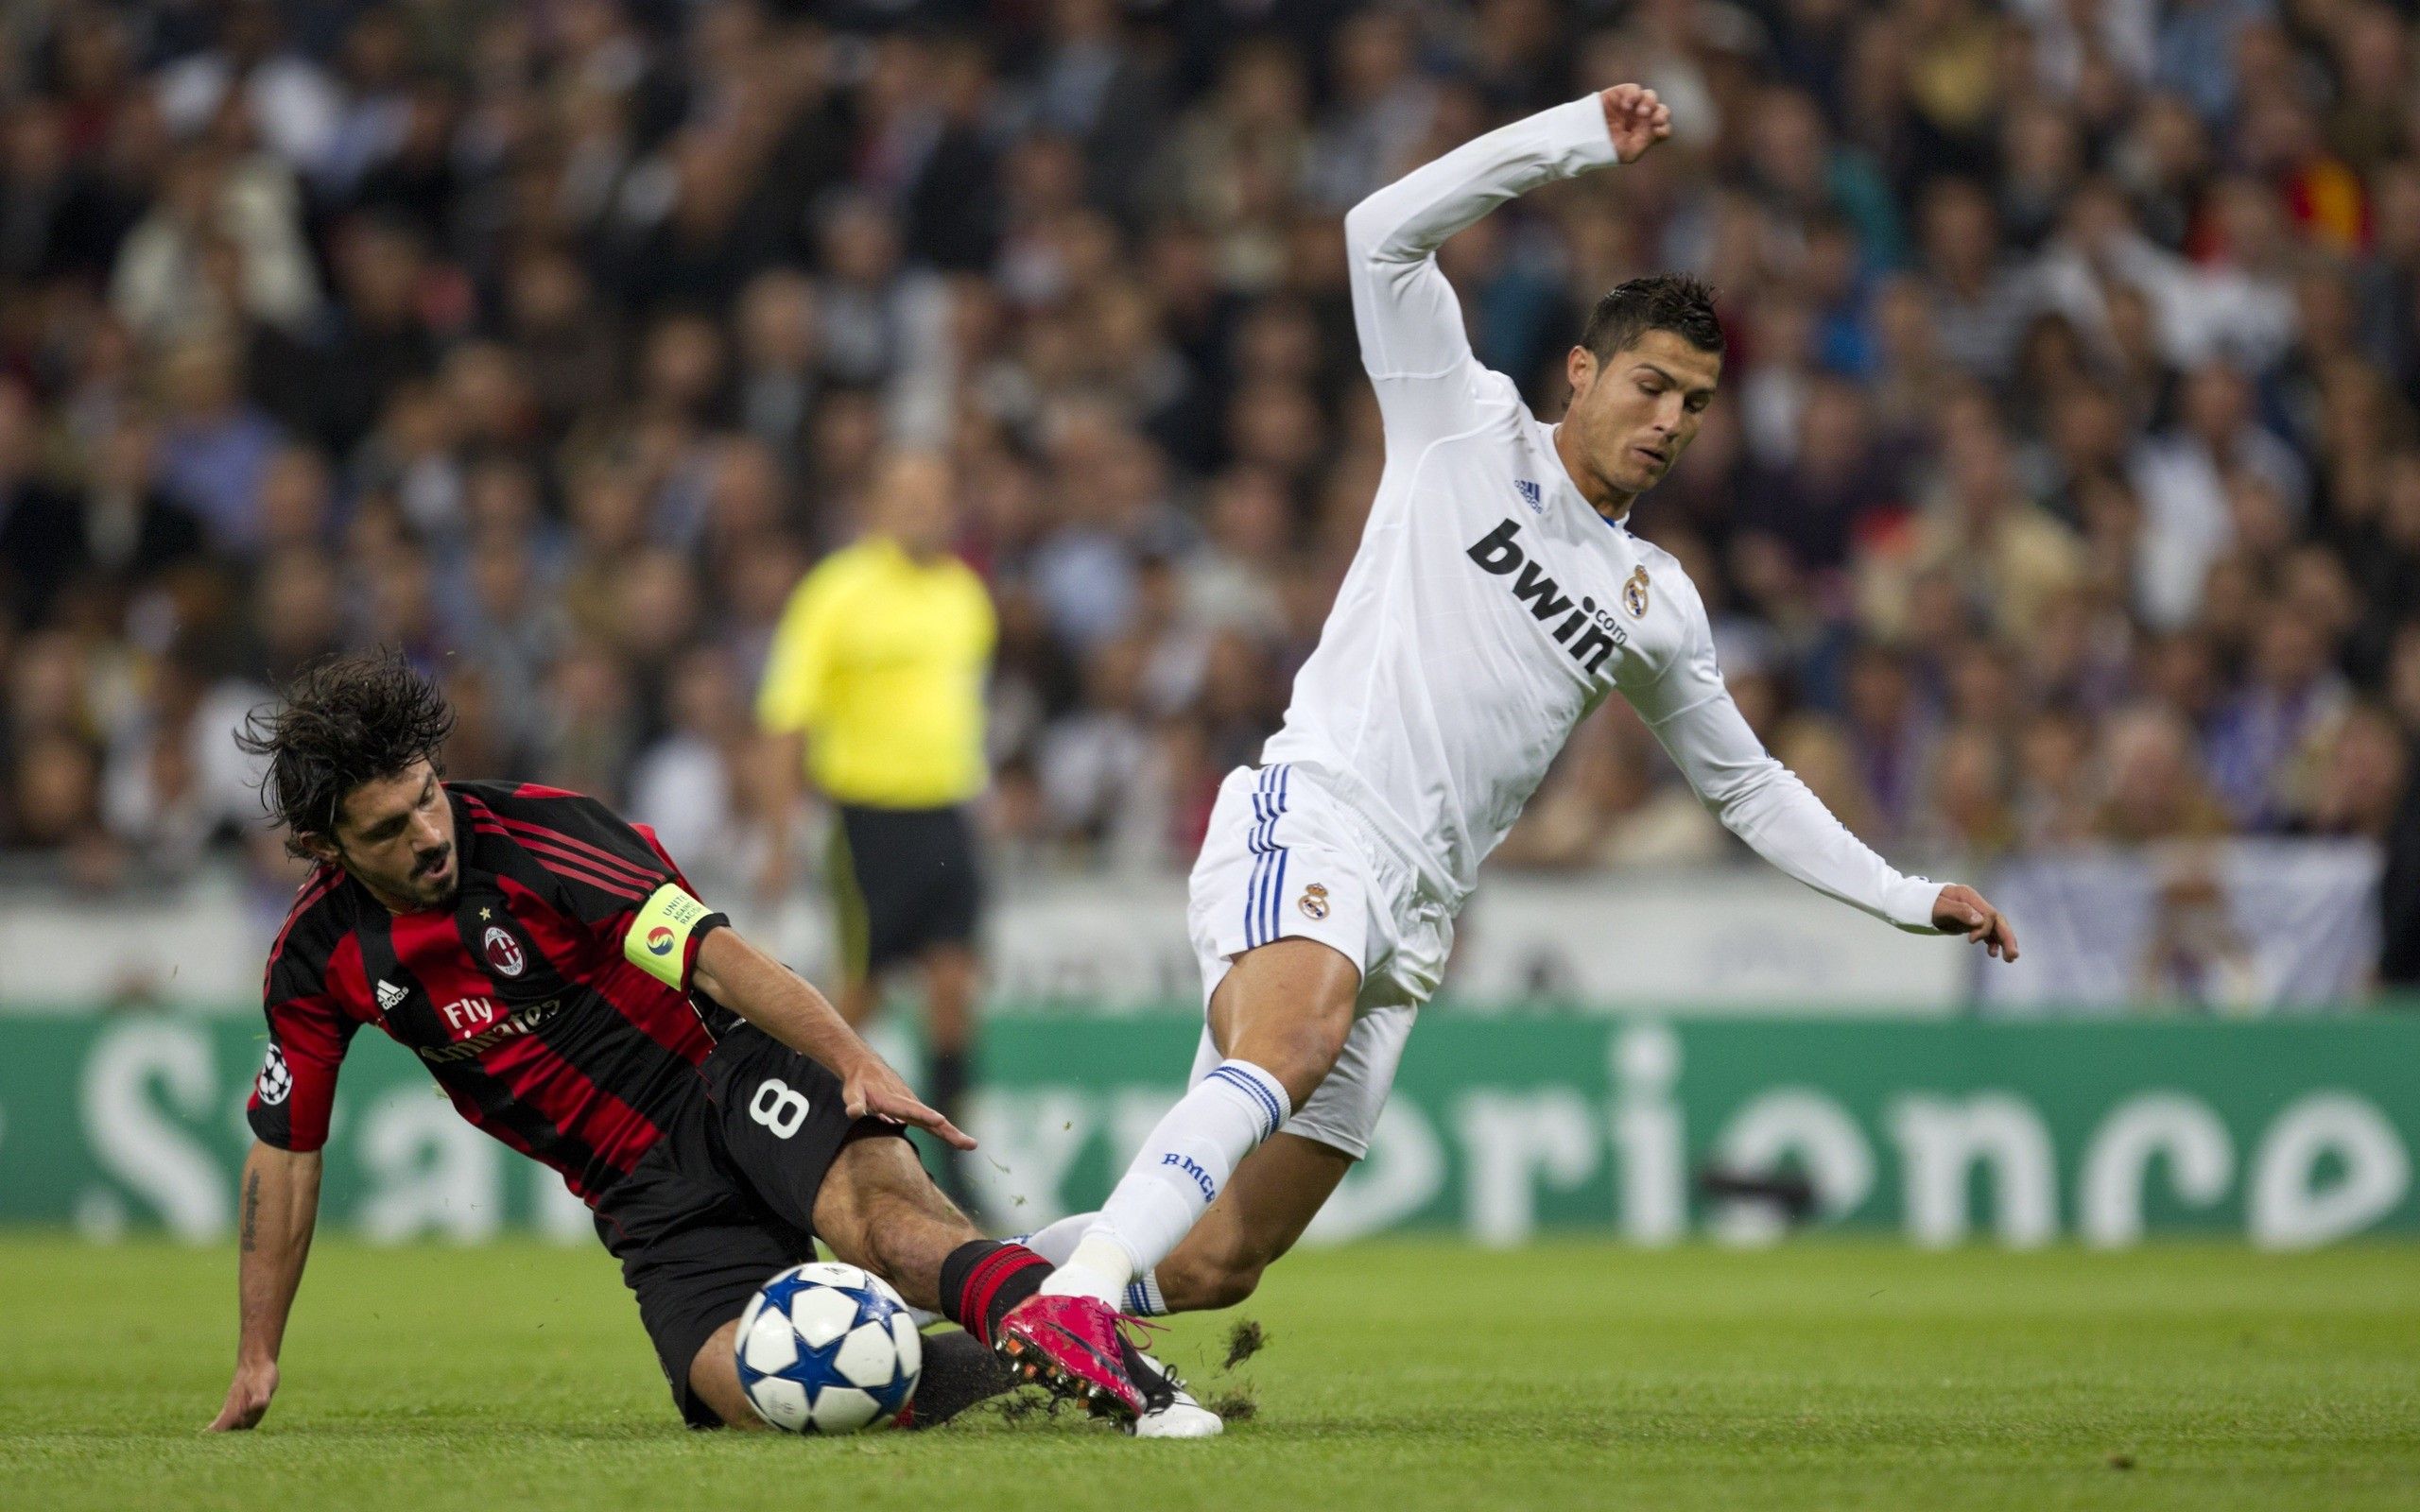 Free download Ronaldo and Gennaro Gattuso Football Player